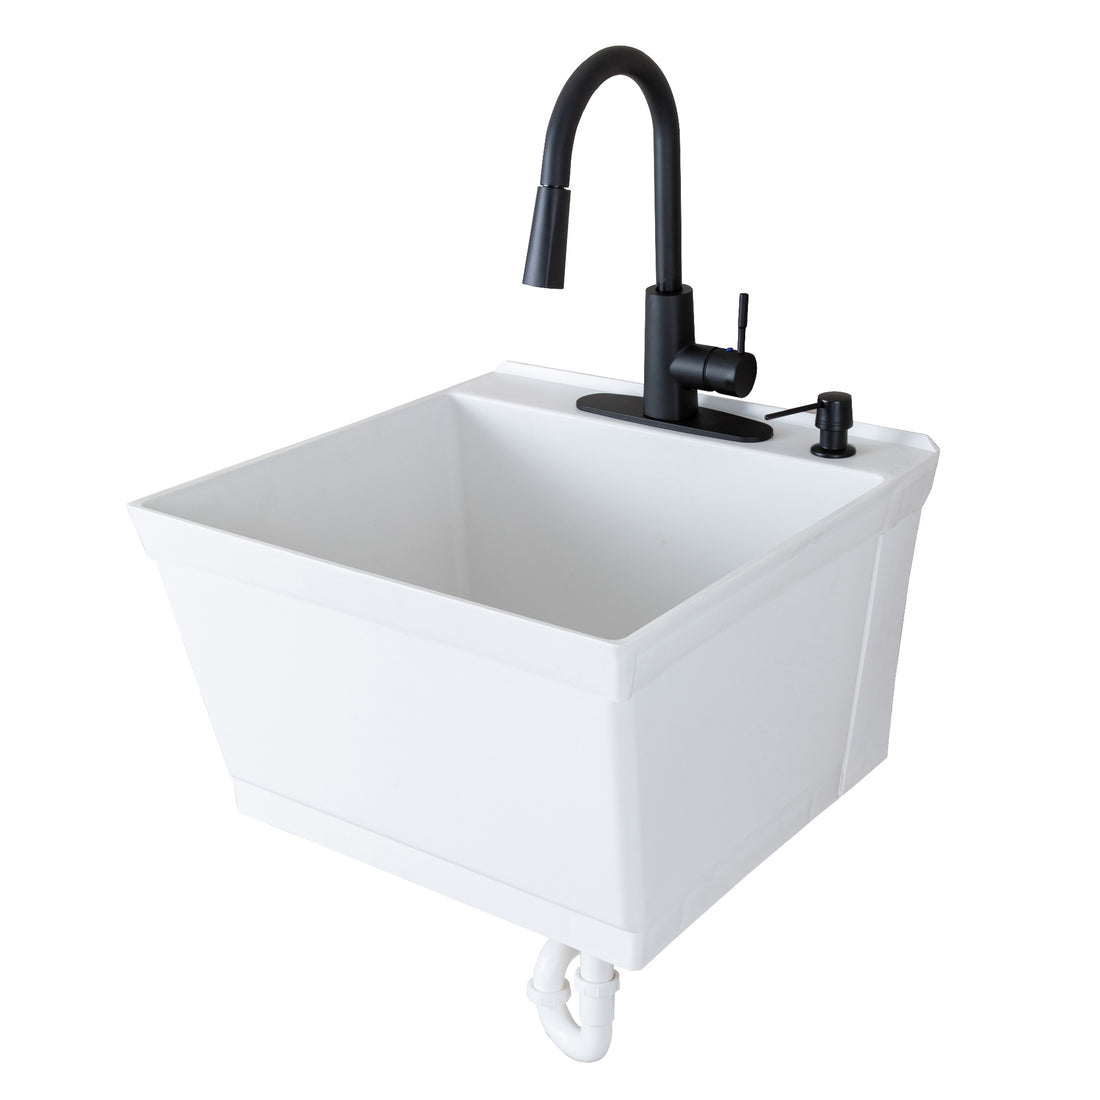 Tehila Standard Wall-Mounted White Utility Sink with Black Finish Pull-Down Faucet - Utility sinks vanites Tehila